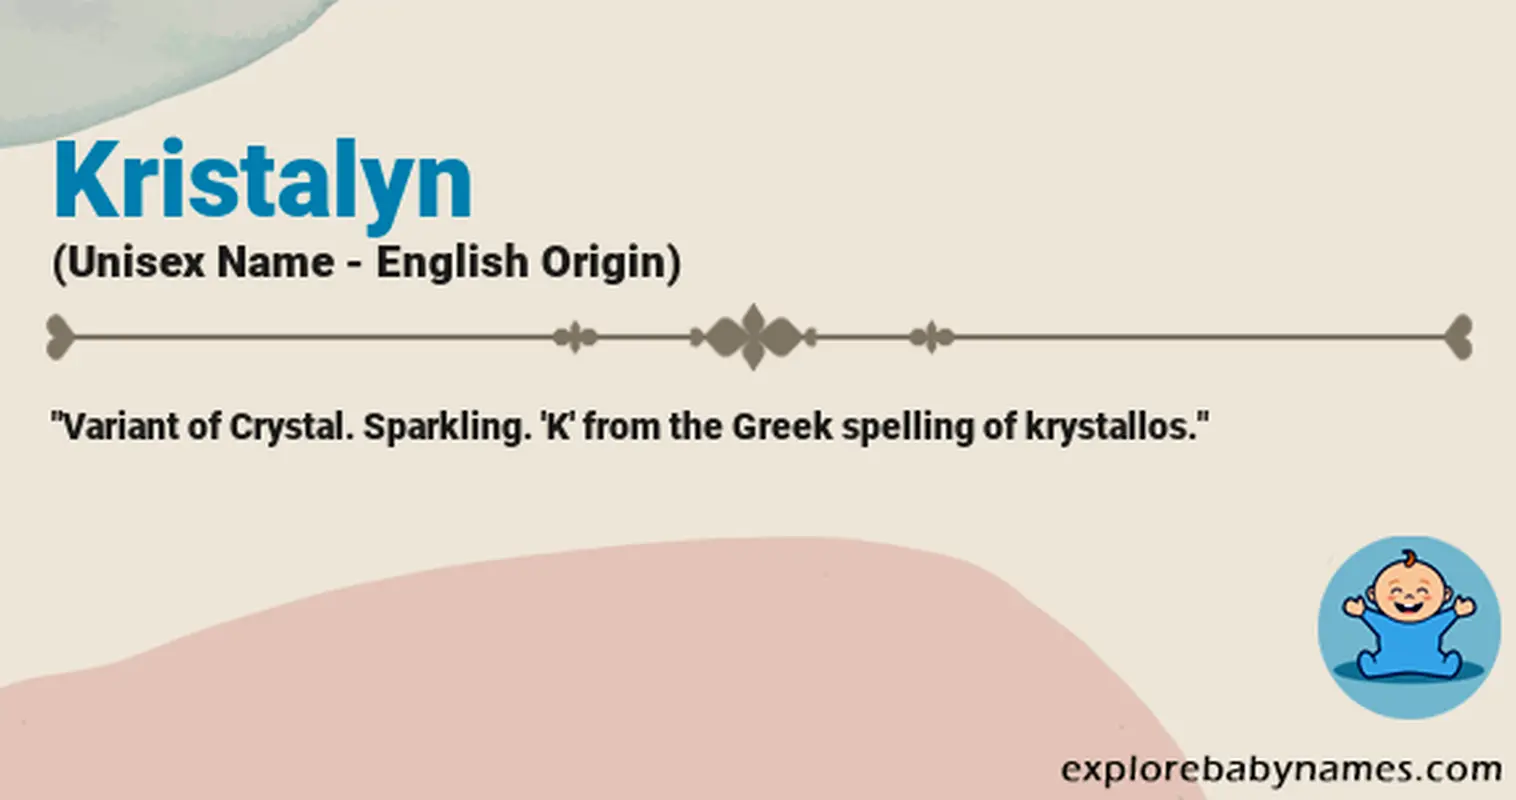 Meaning of Kristalyn